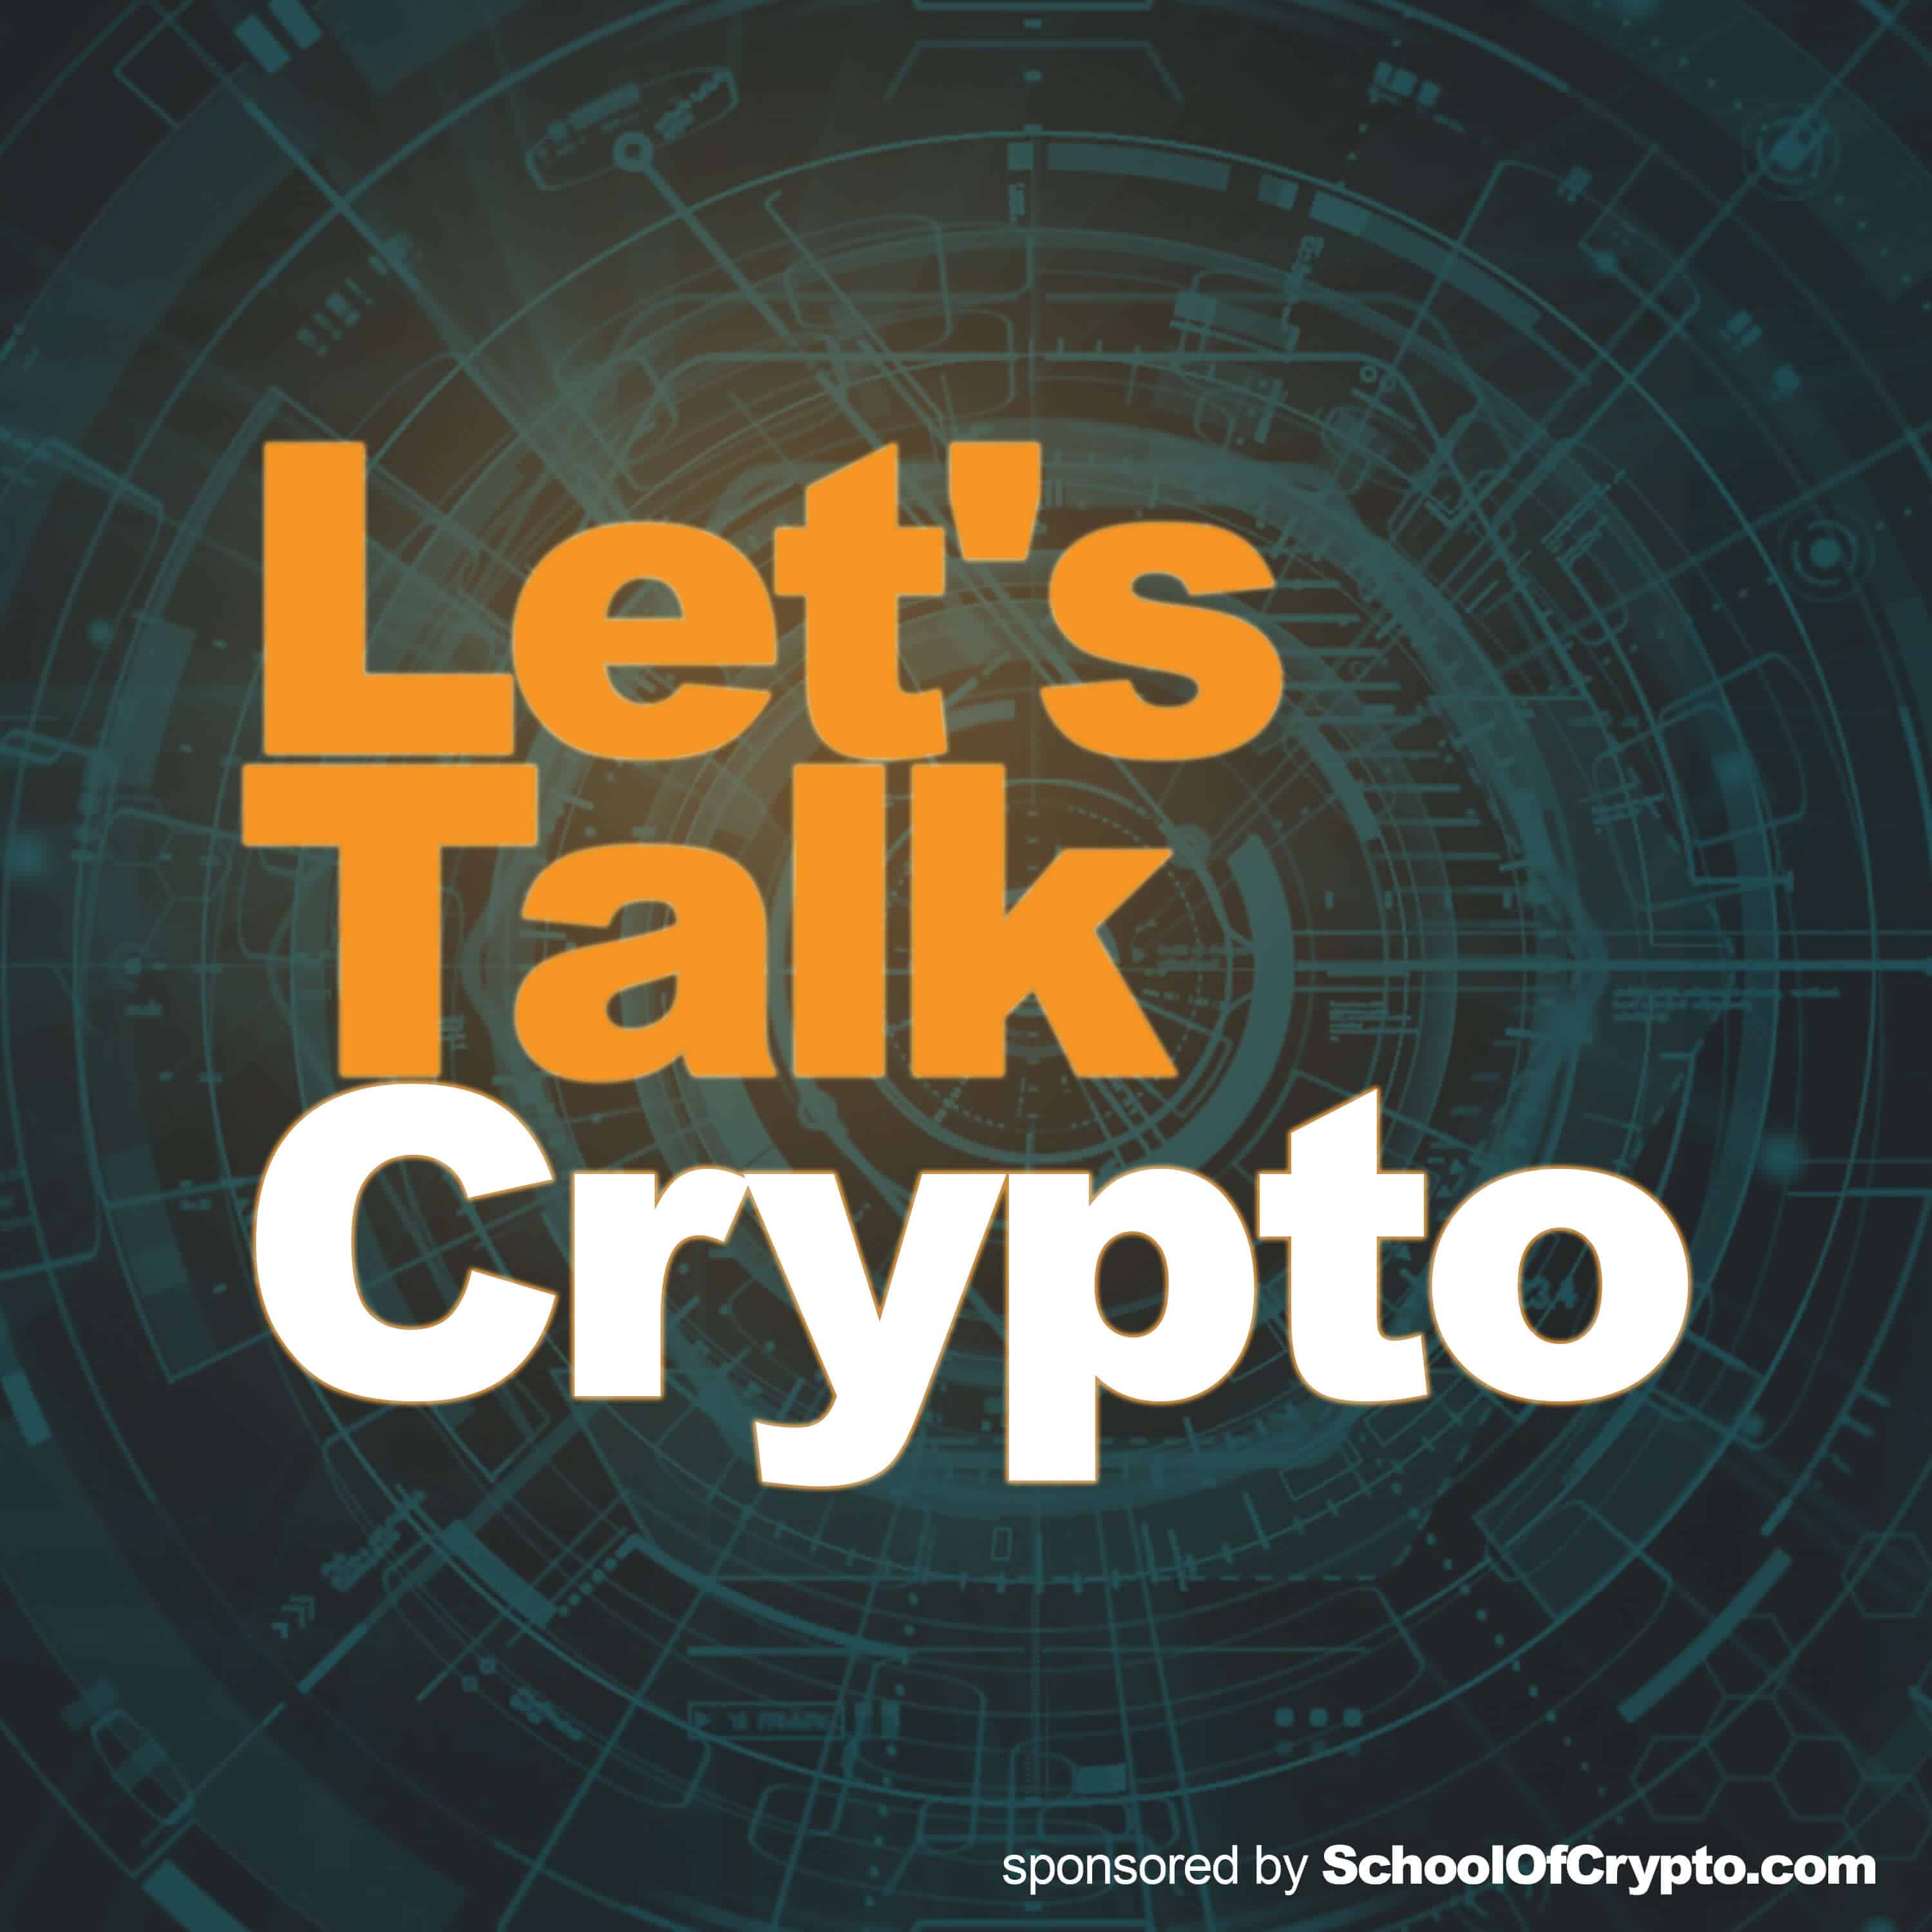 Let's Talk Crypto - Bitcoin, Blockchain and Cryptocurrency: Sponsored by SchoolOfCrypto.com